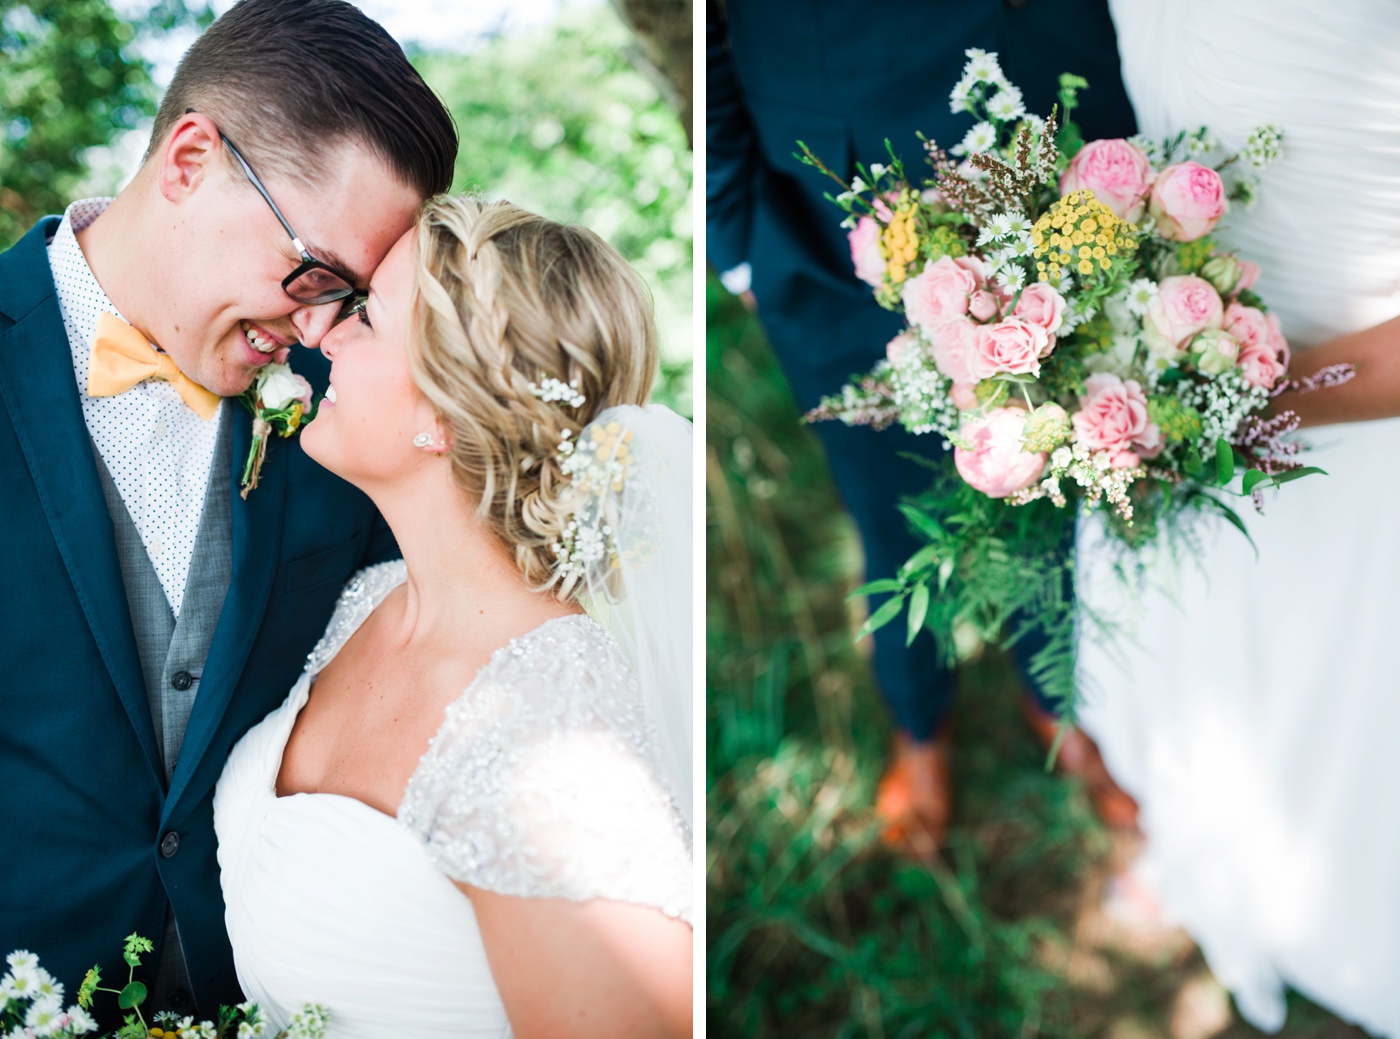 Kristen + John - Stroud Preserve First Look - Reading Pennsylvania Wedding Photographer - Alison Dunn Photography photo